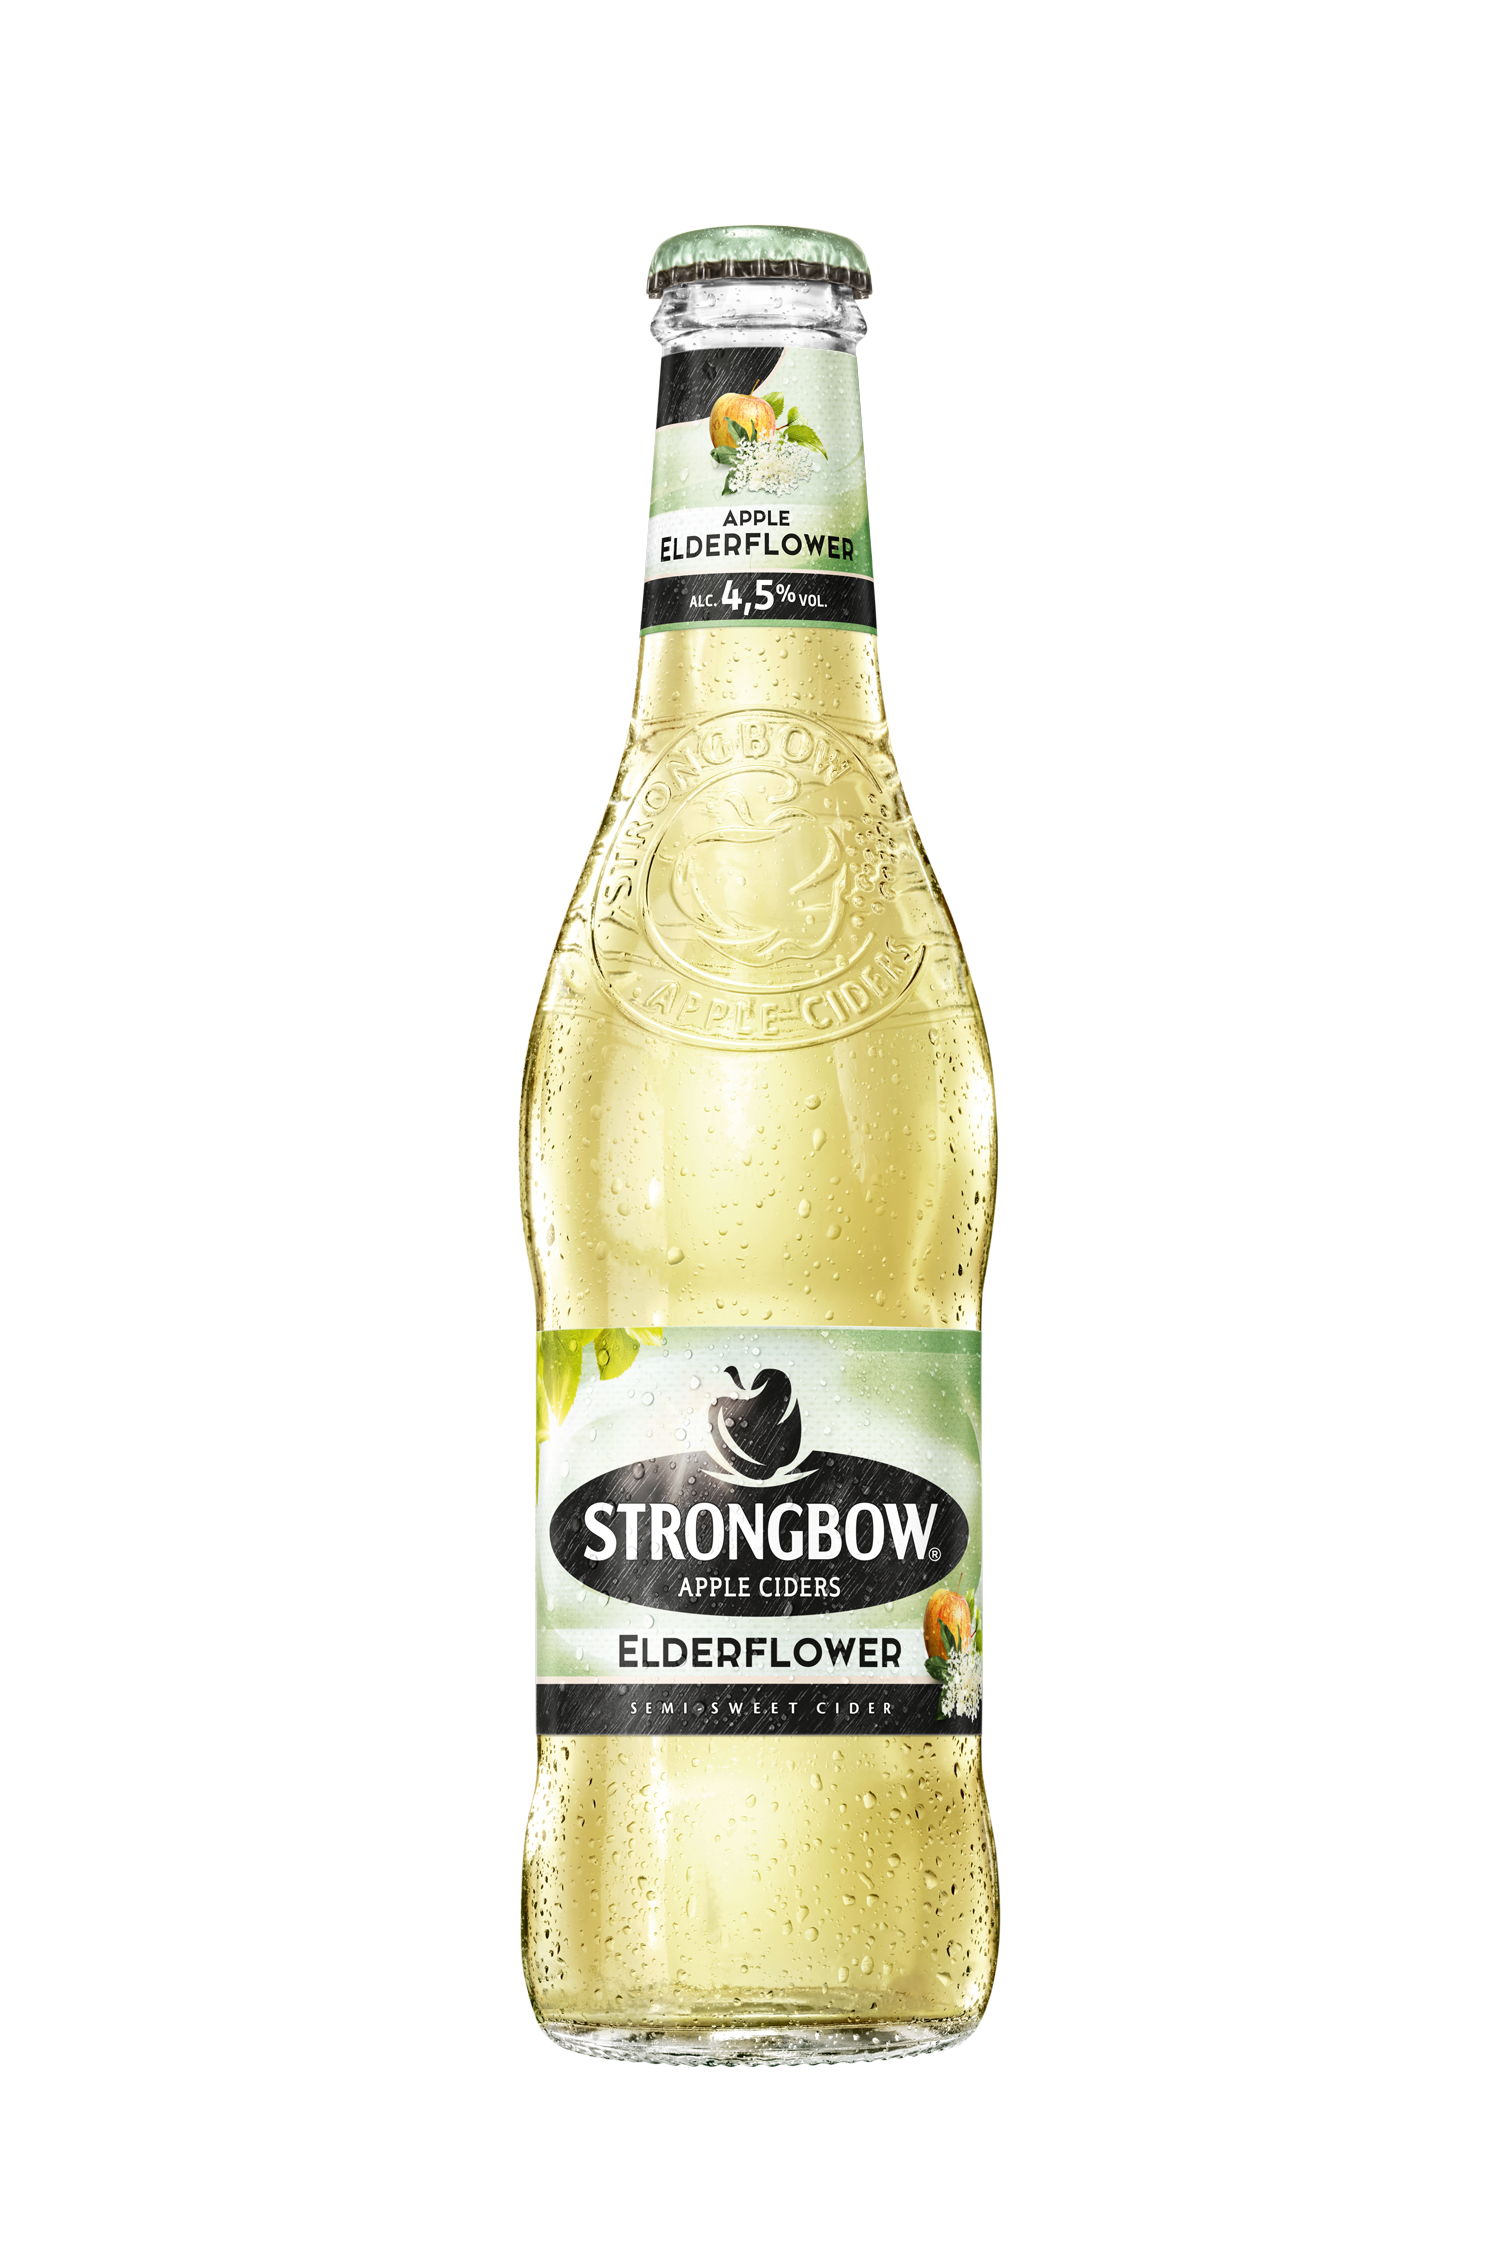 Strongbow Elderflower Carousel Image 1506X2258px